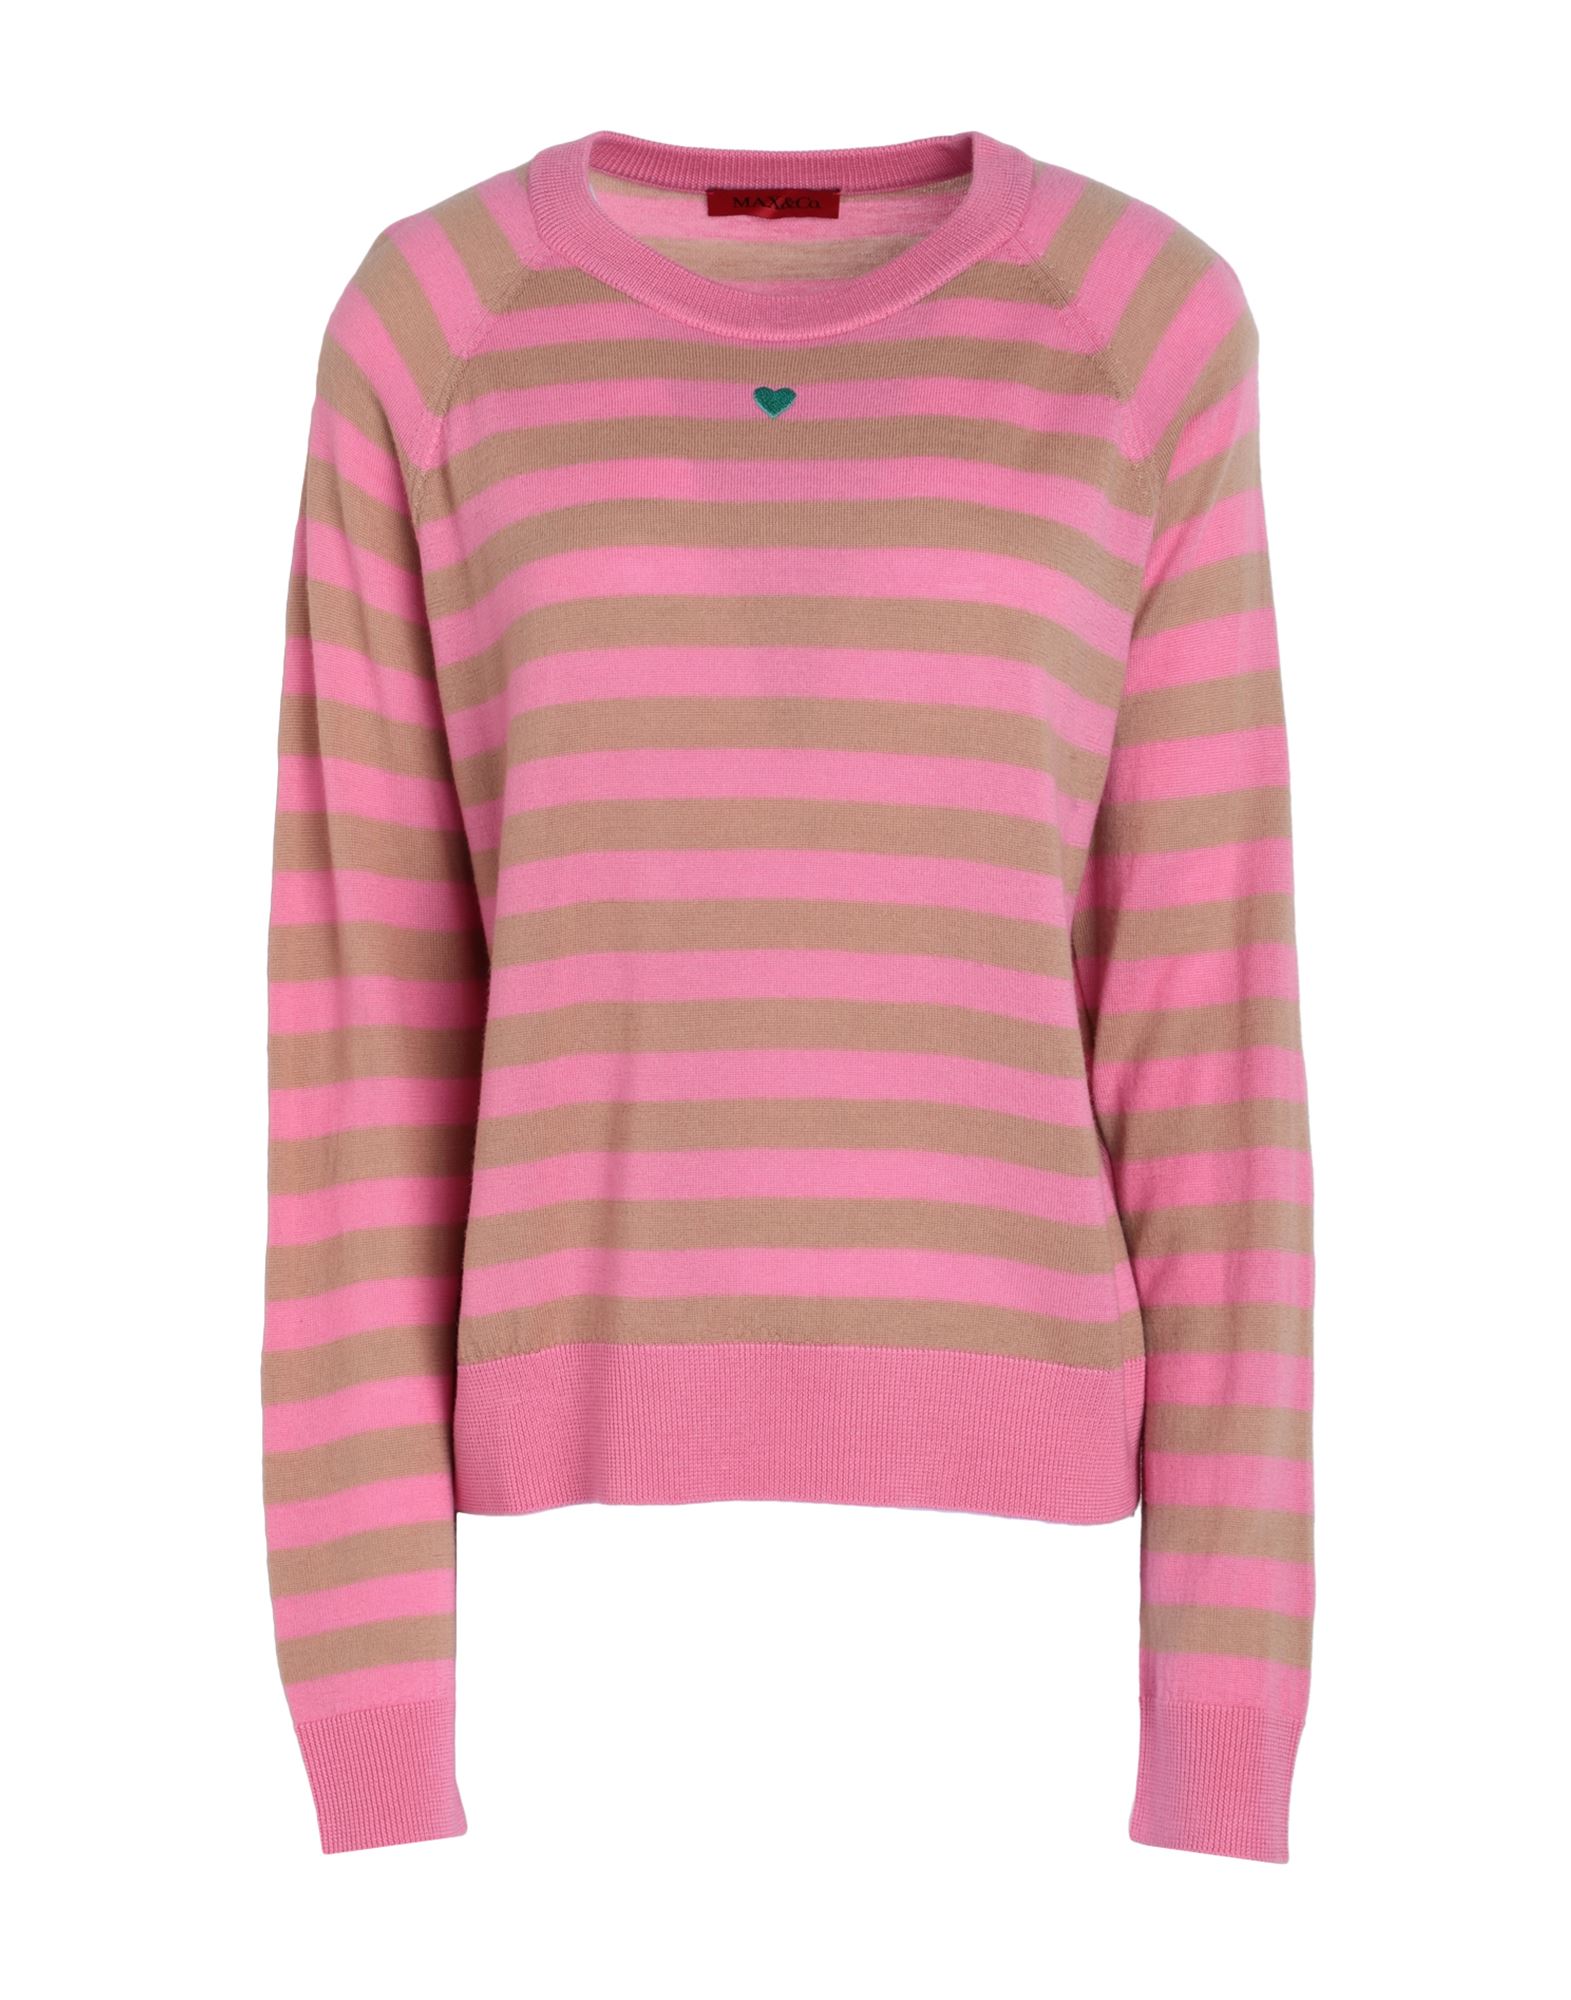 Max & Co . Woman Sweater Pink Size Xl Virgin Wool